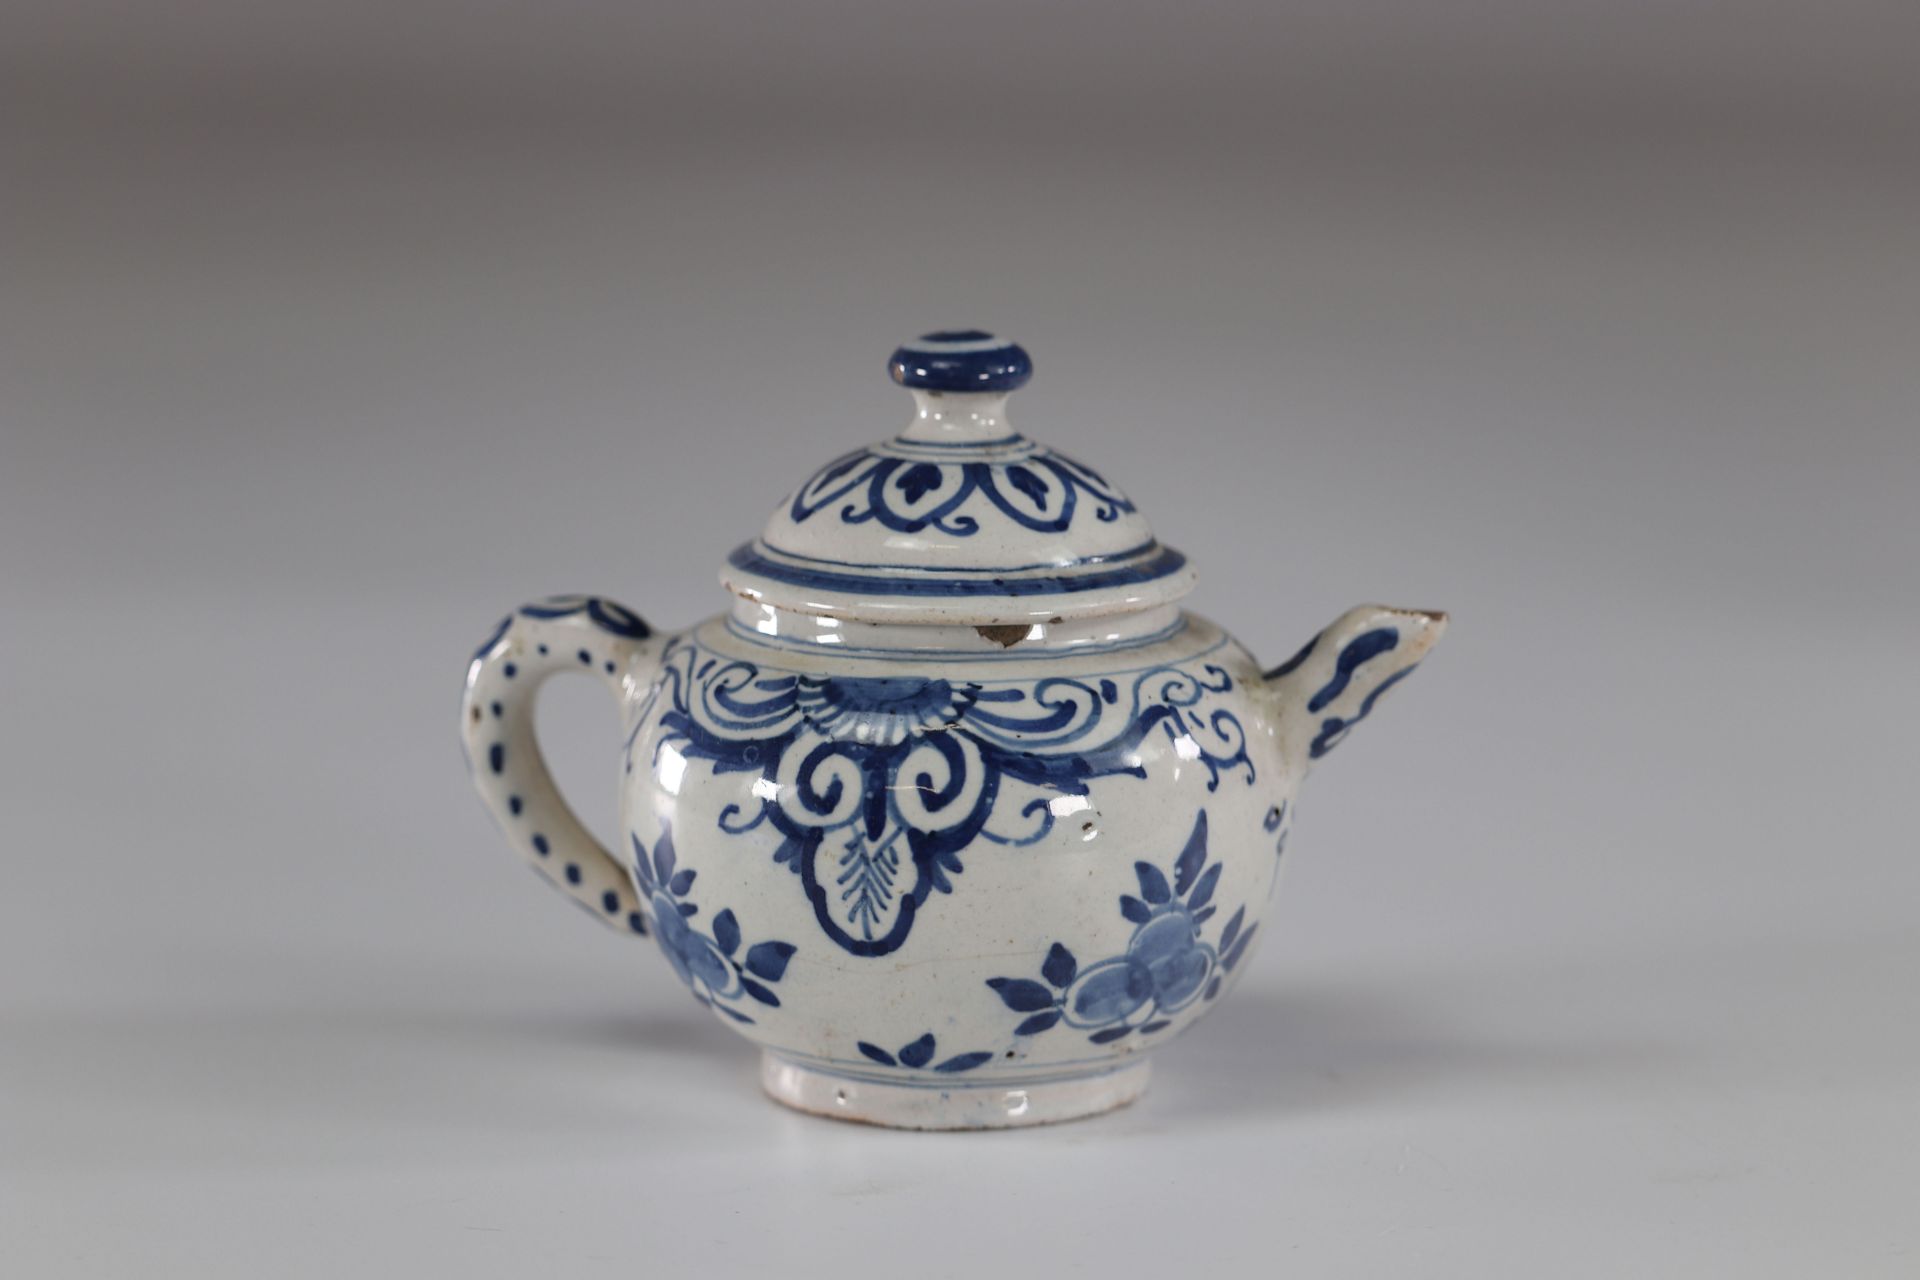 China blue white porcelain teapot - Image 3 of 4